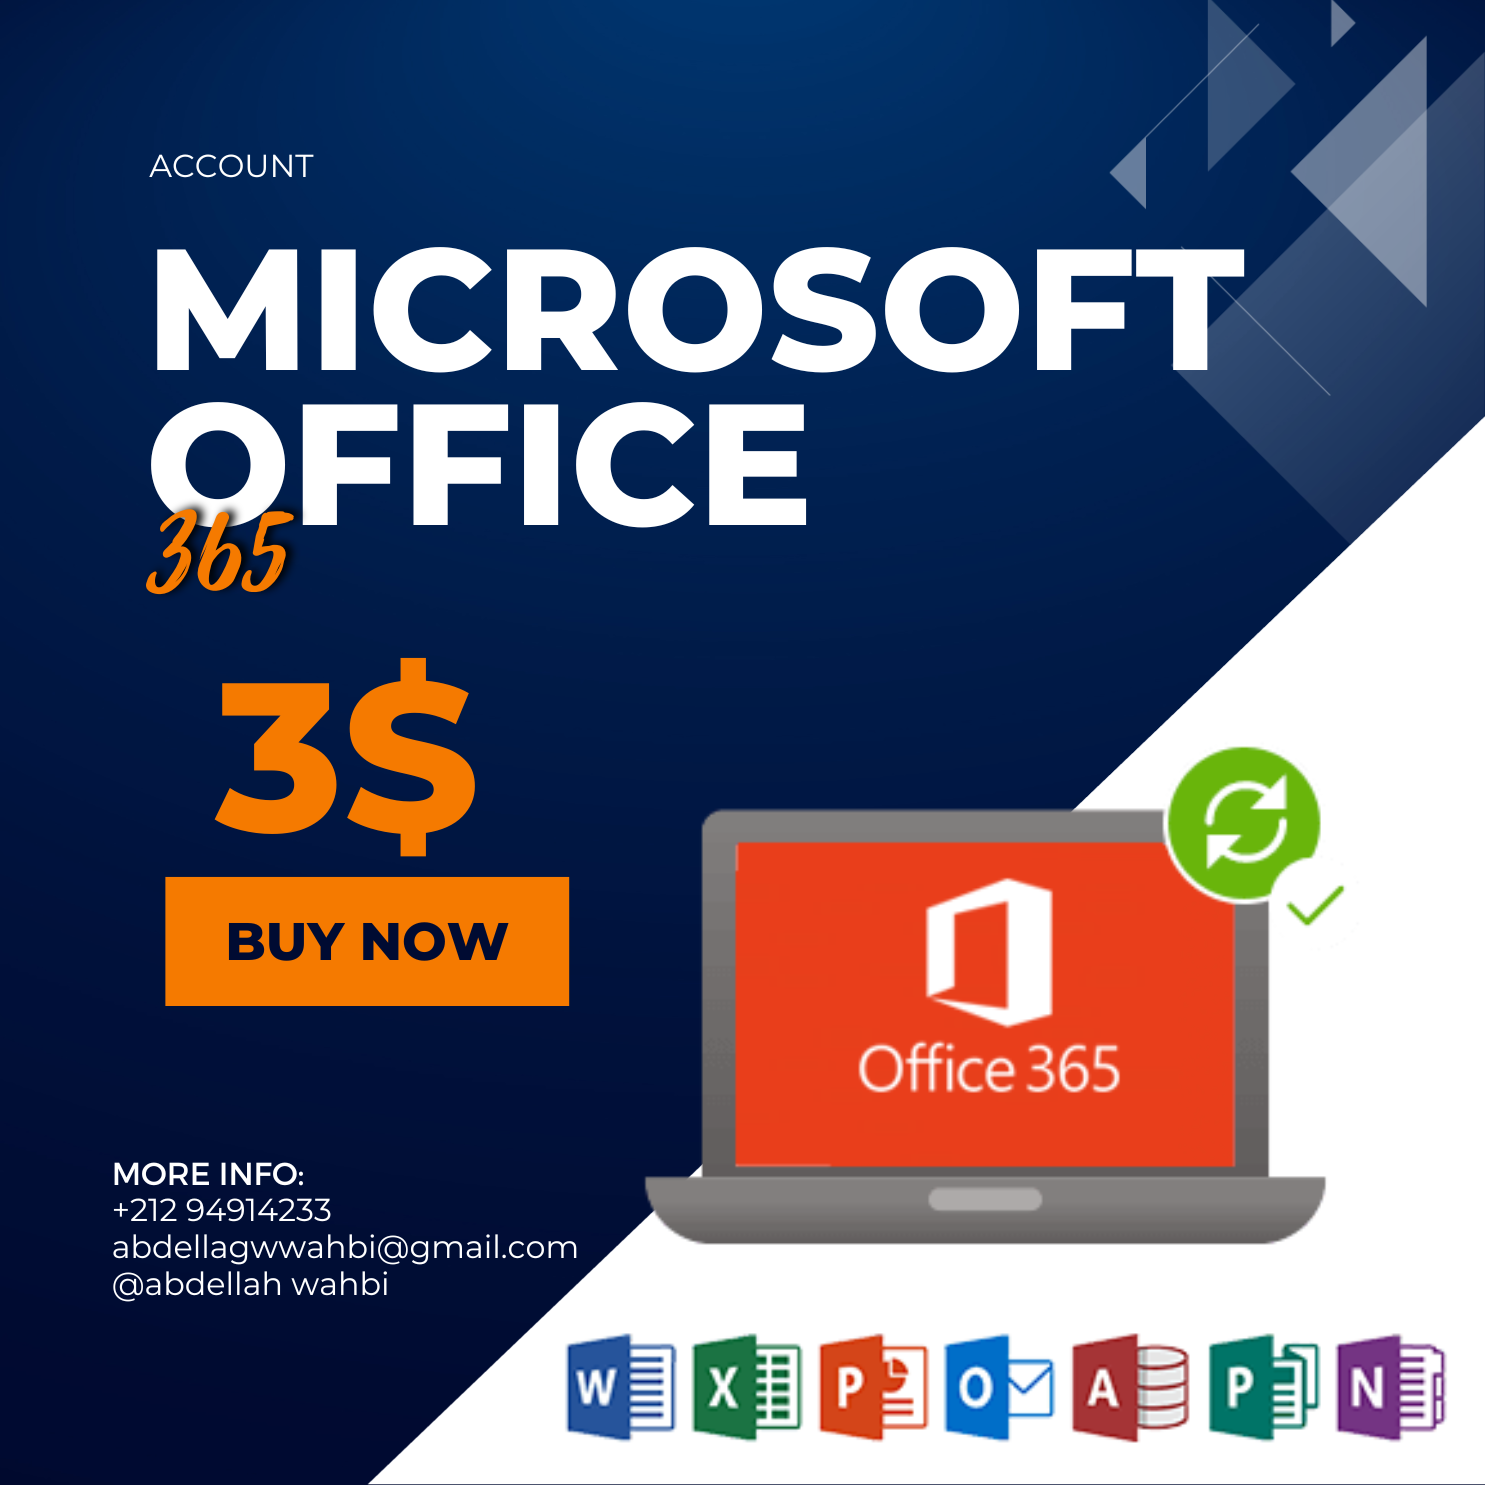 Account Microsoft Office 365